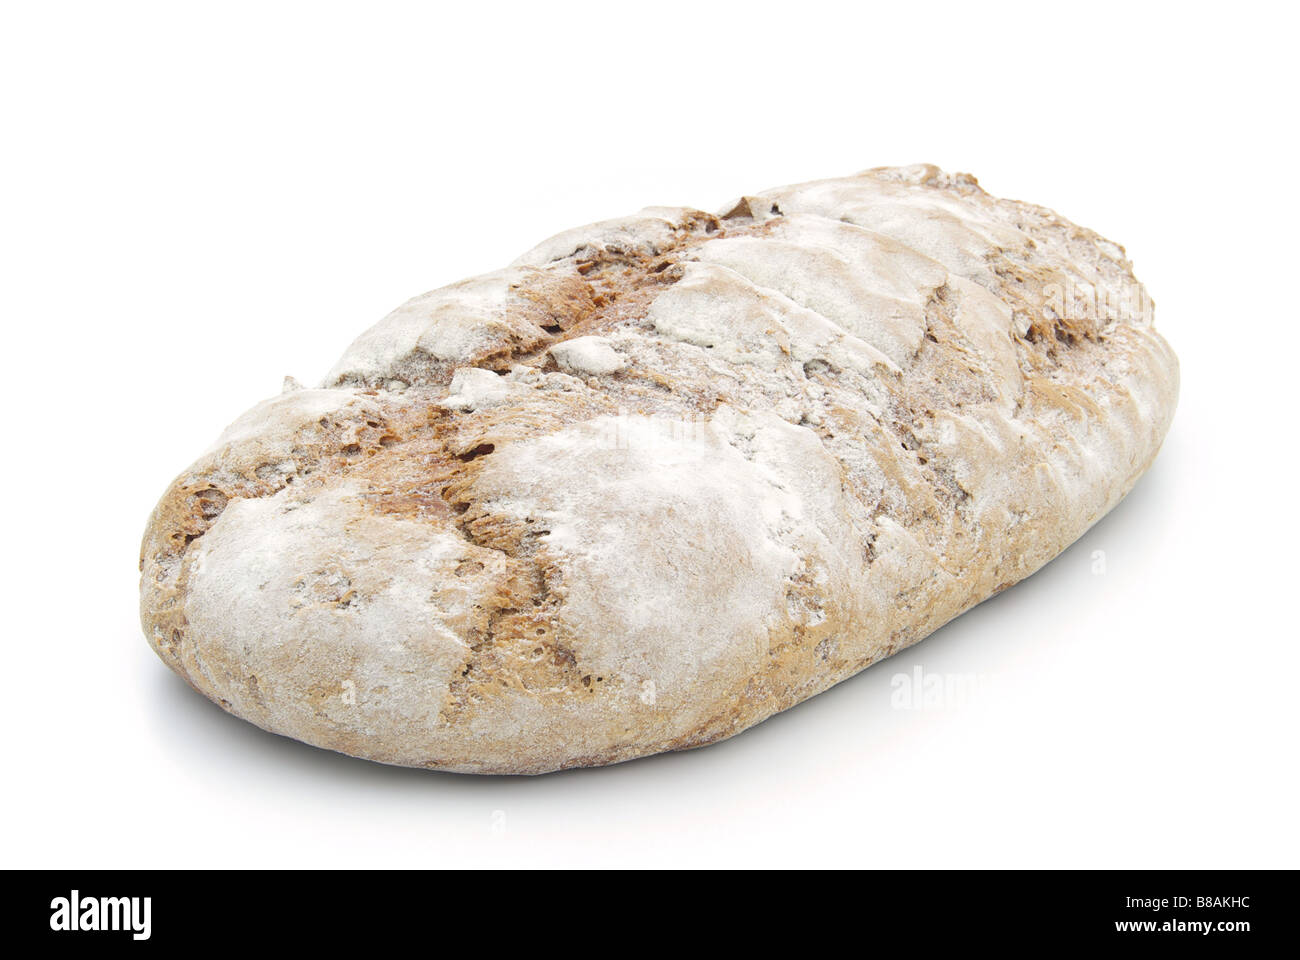 Brot bread 01 Stock Photo